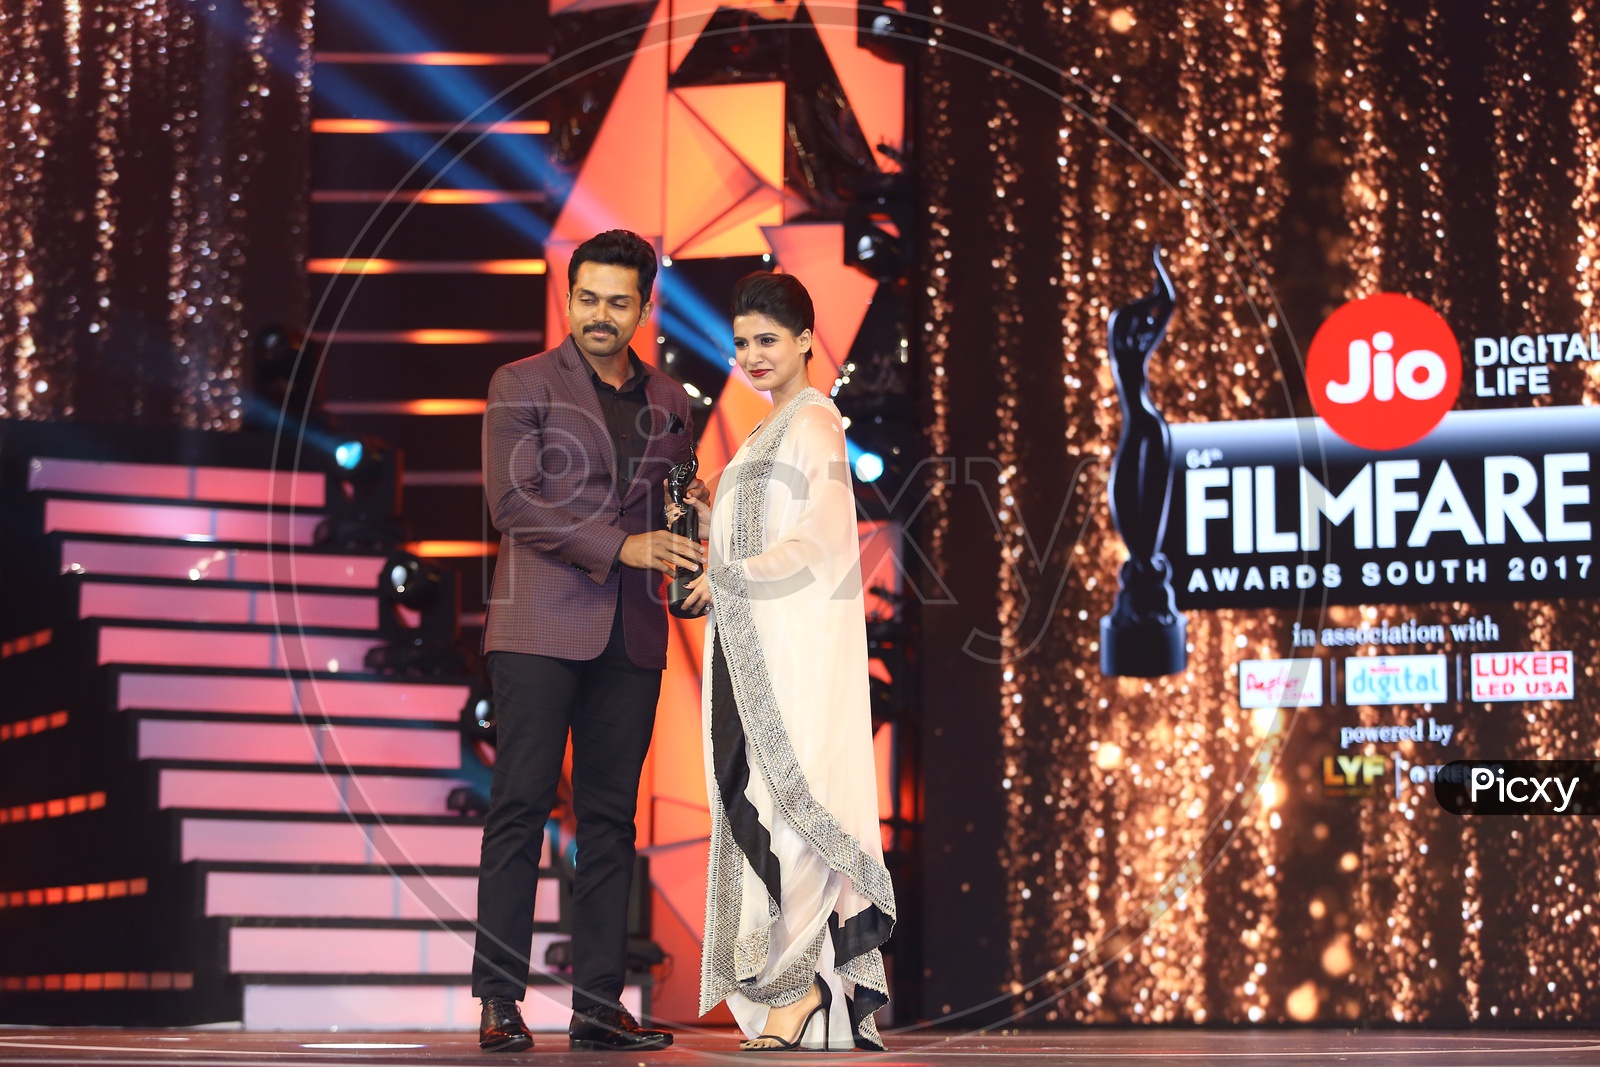 Tollywood Movie Actress Samantha Ruth Prabhu receiving a filmfare award